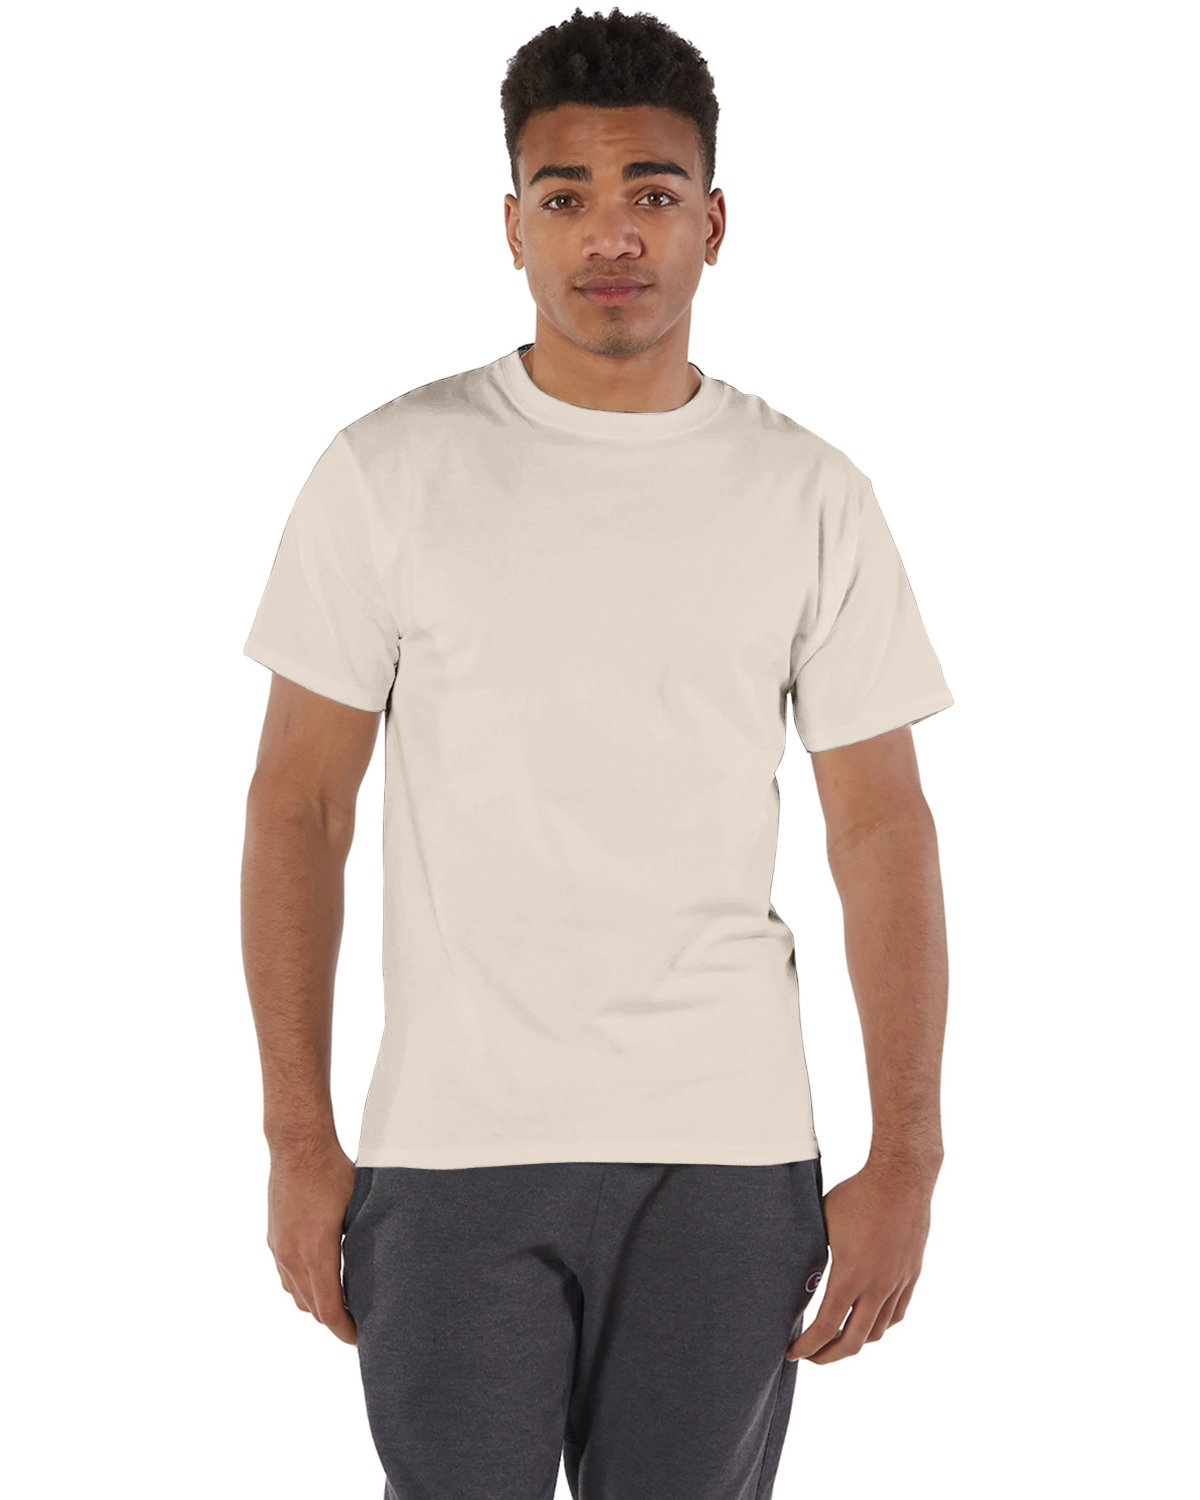 Champion Adult 6 oz. Short-Sleeve T-Shirt SAND 